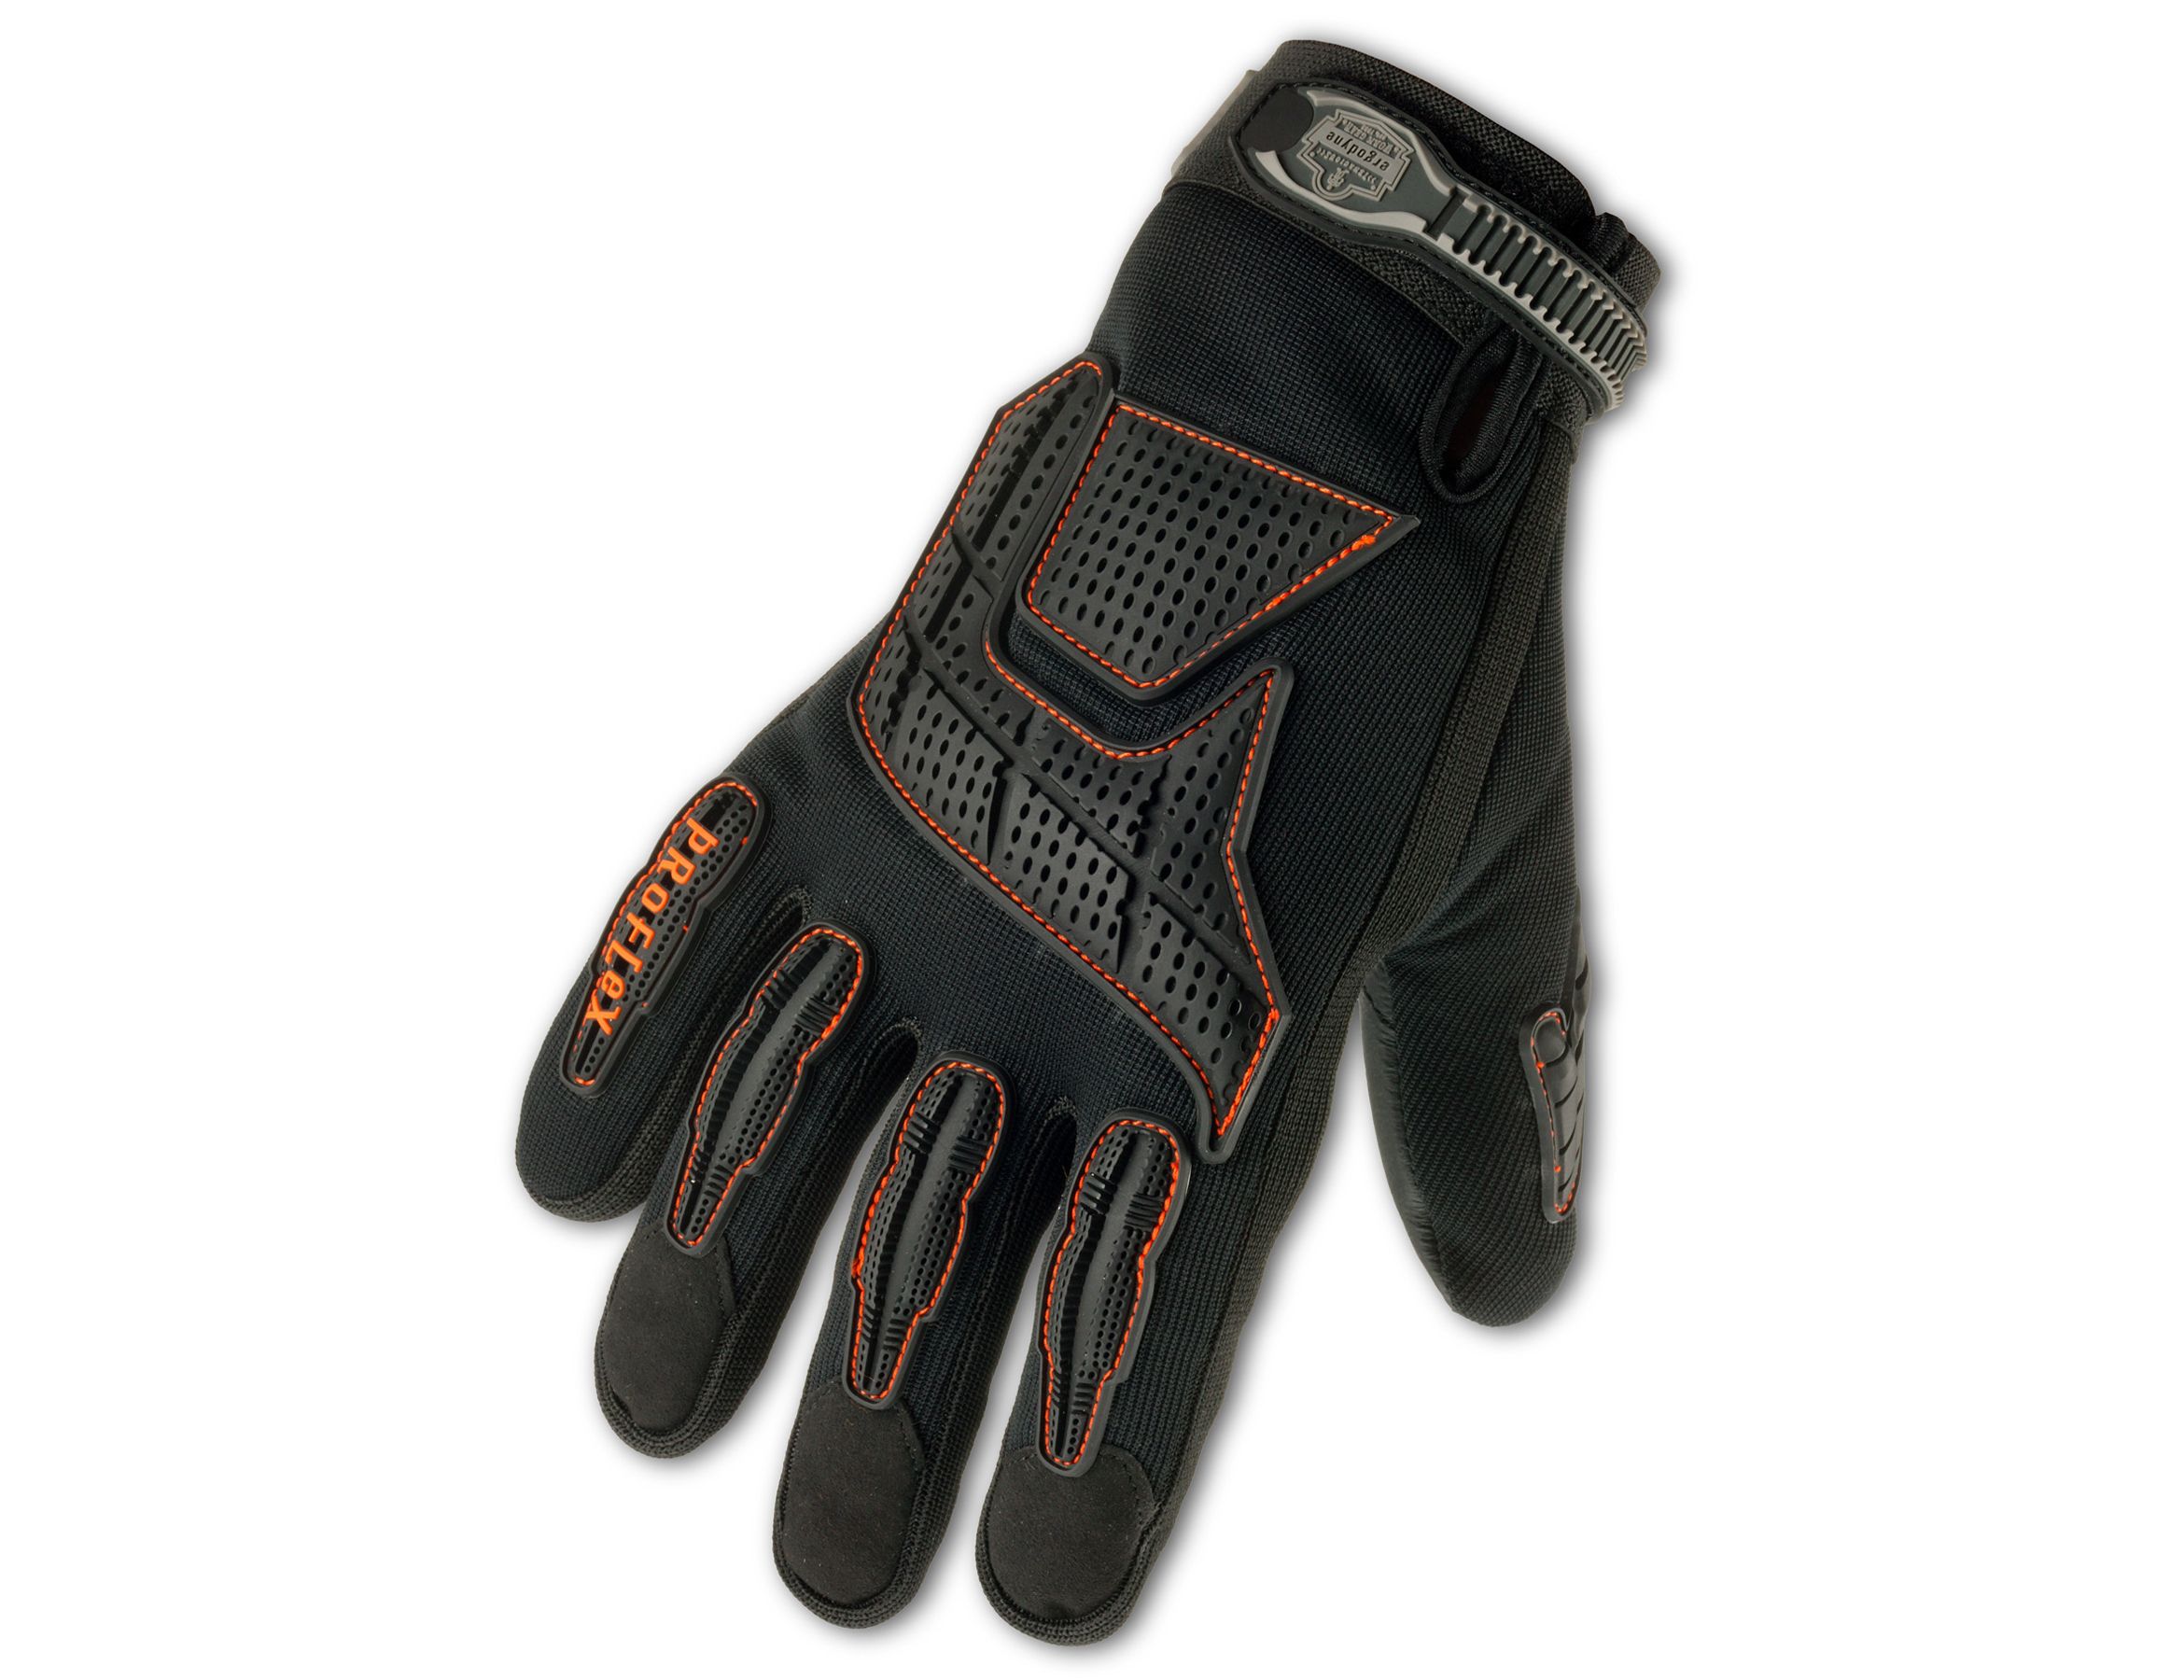 Shop Anti-Vibration Gloves - Shop Performance Gloves - Gloves  Hand  Protection